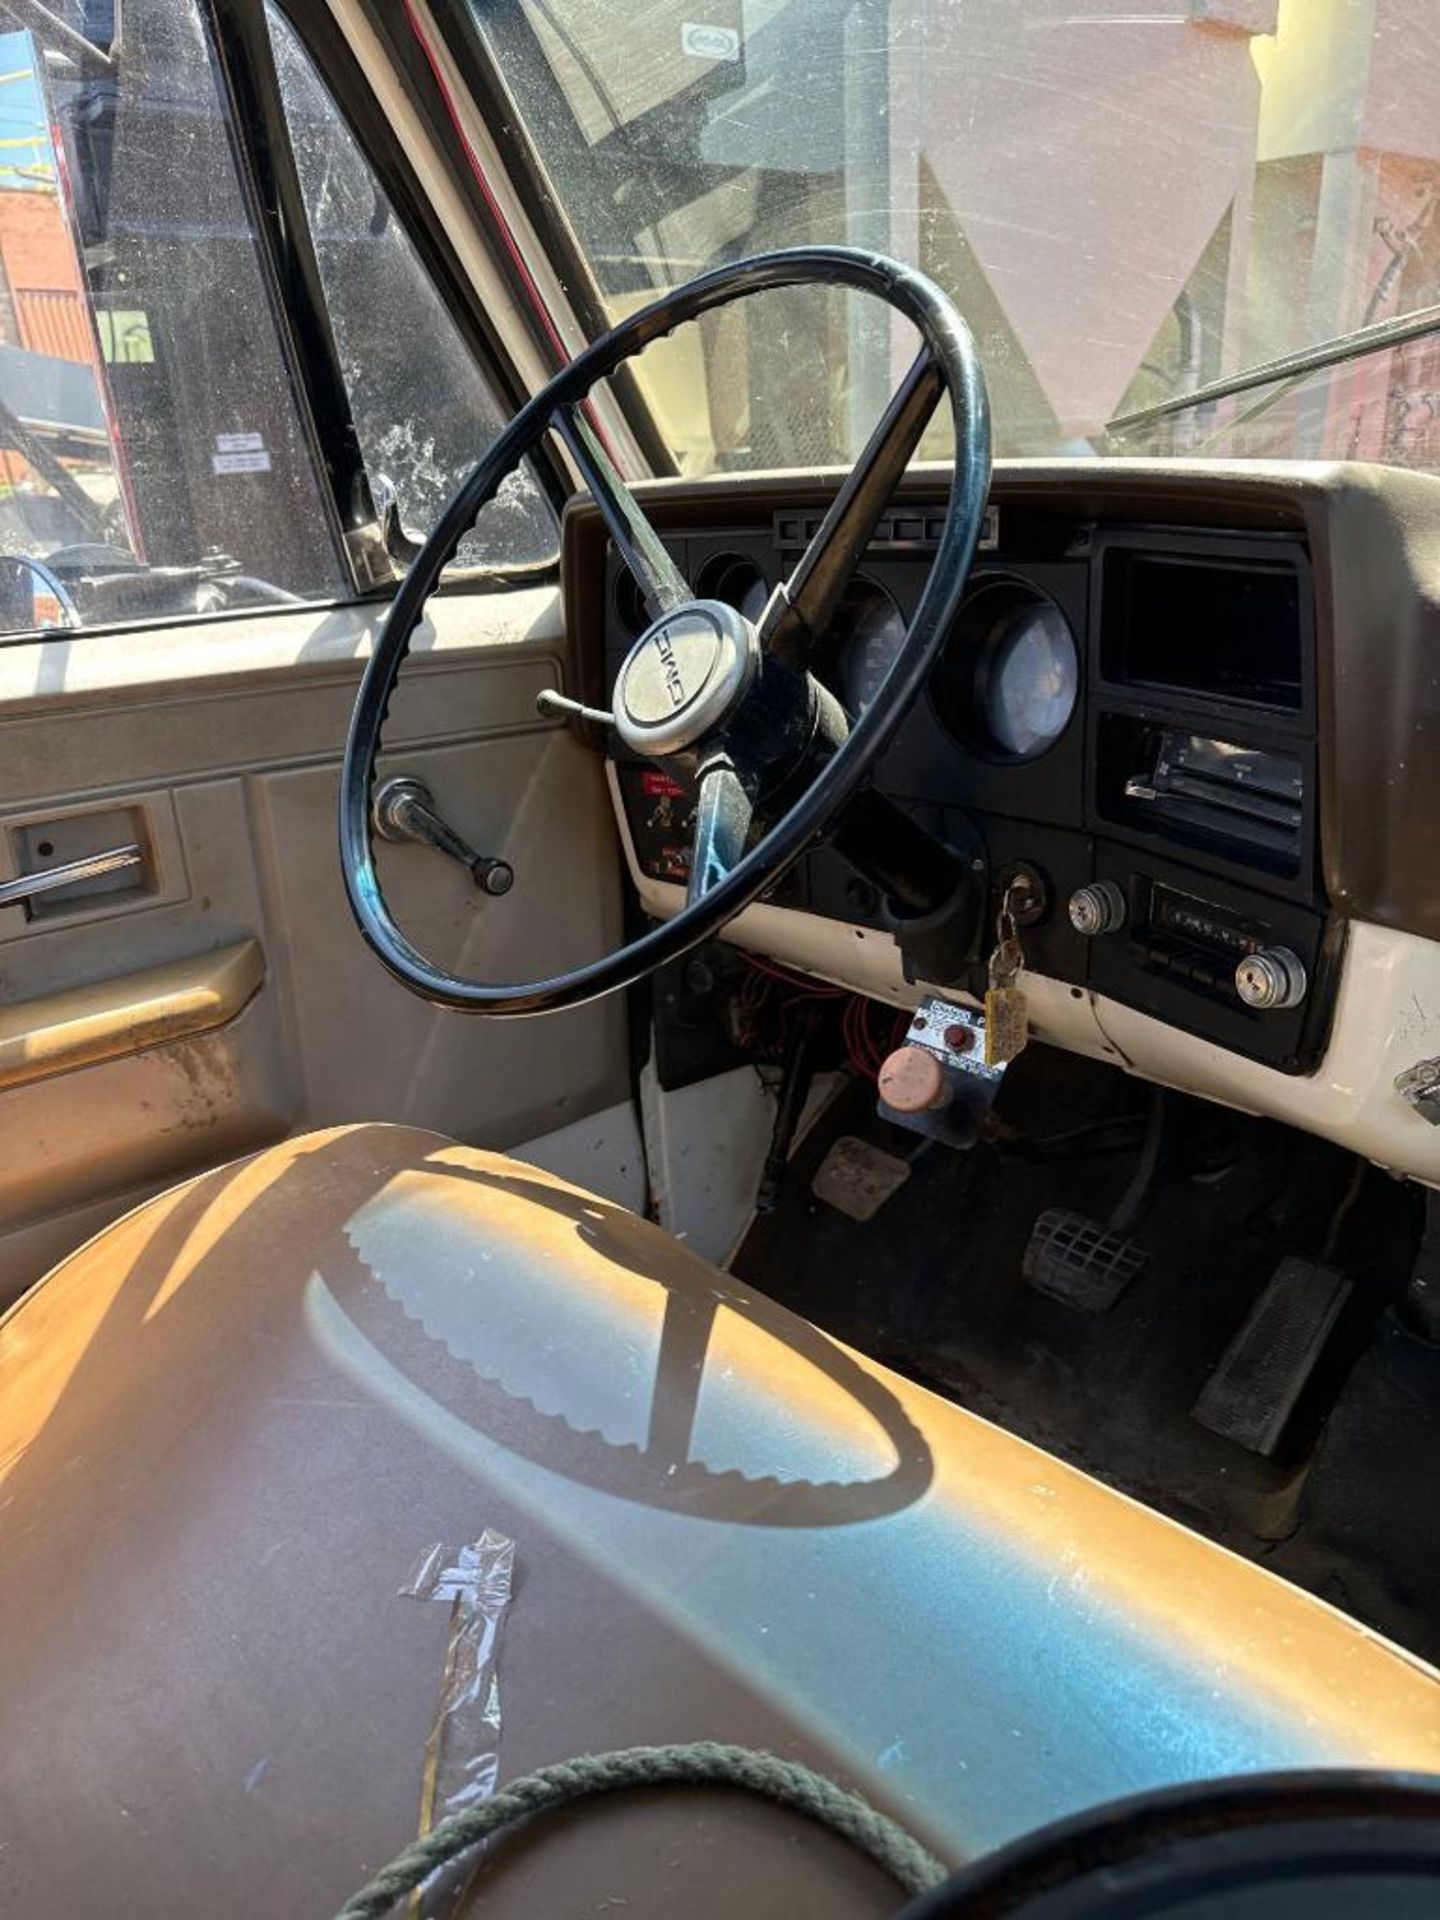 1983 Chevrolet C70 32ft Bucket Truck (located offsite-please read full description) - Image 4 of 11